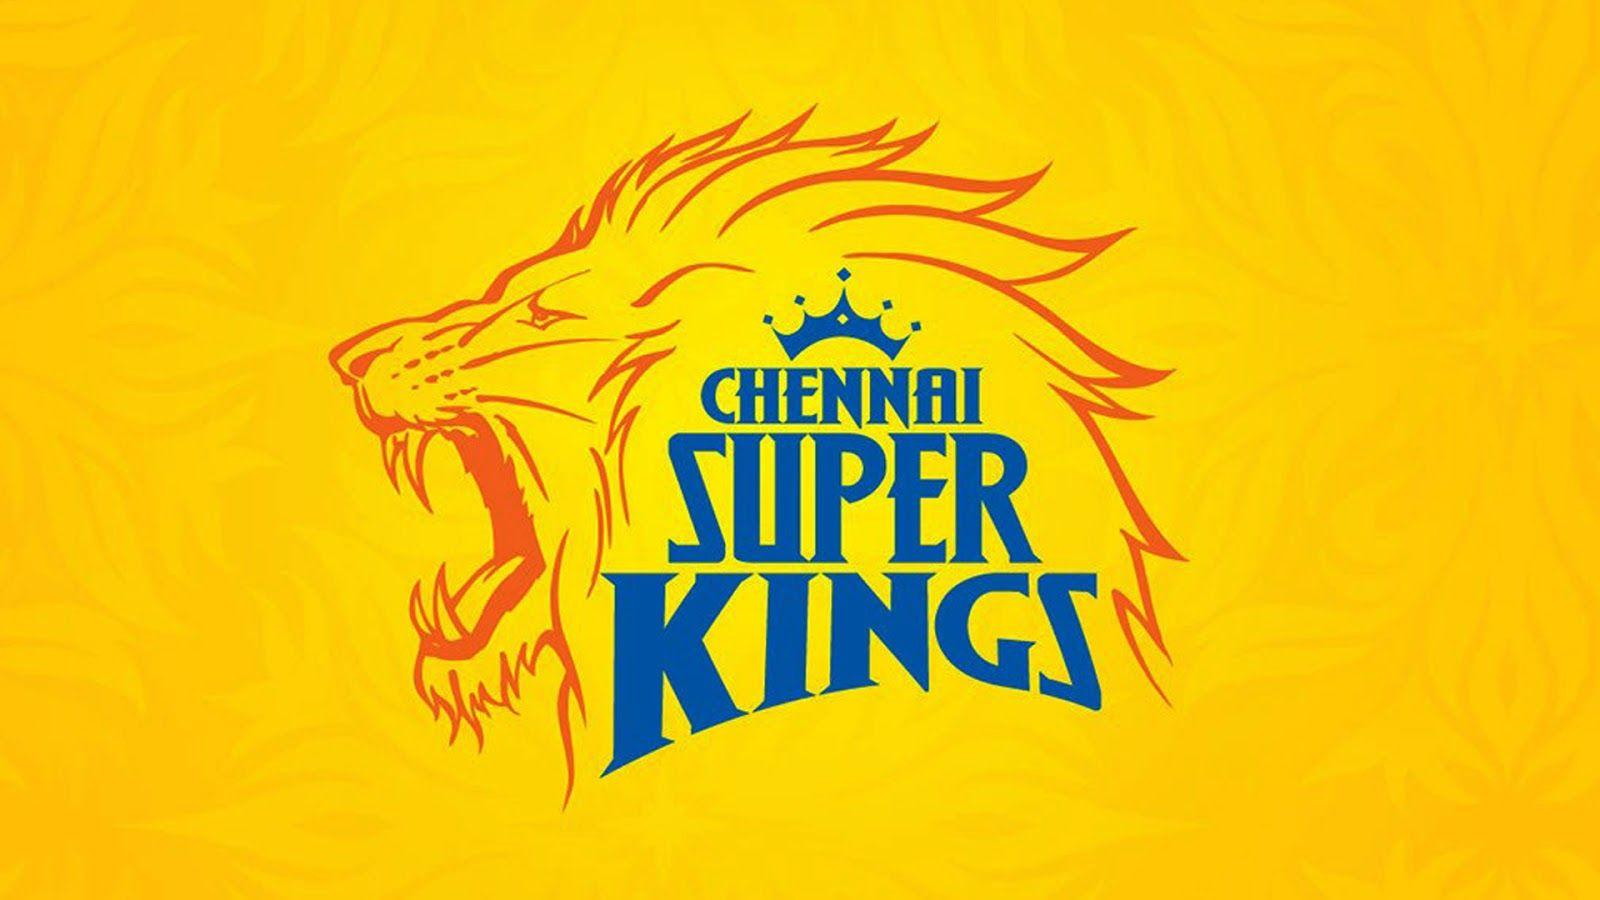 Chennai Super Kings. Chennai Super kings. Chennai super kings